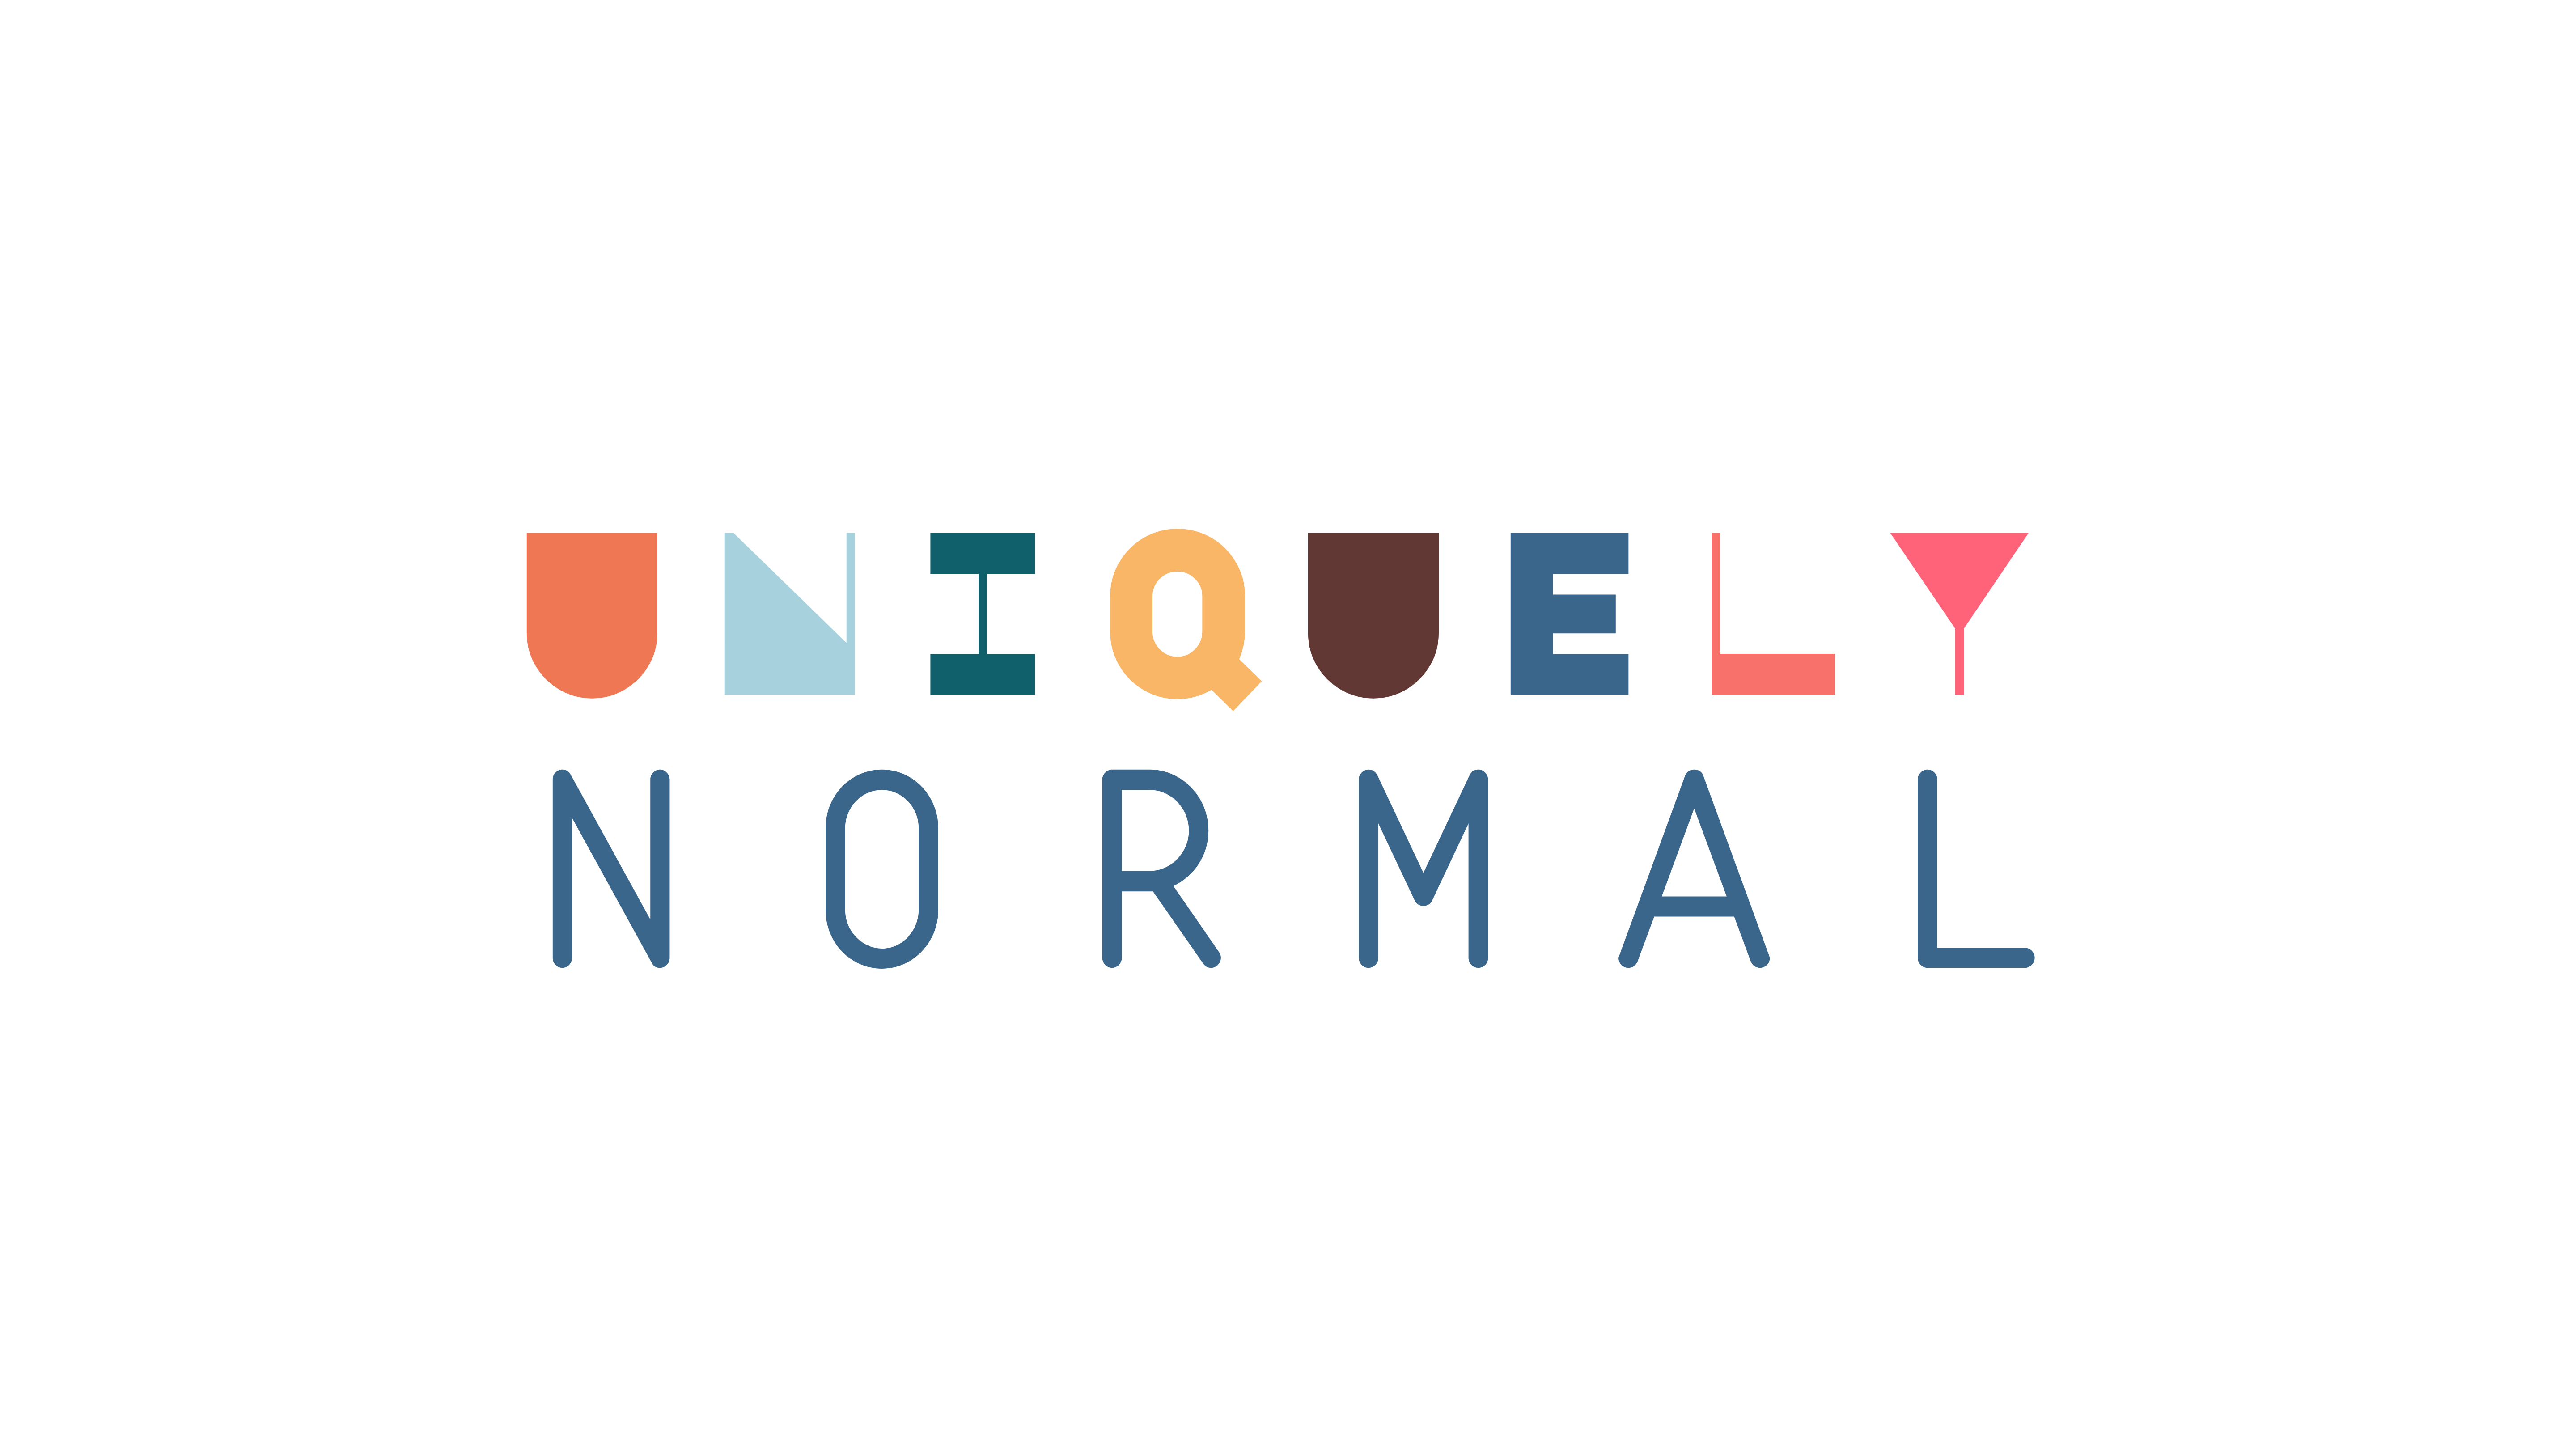 Uniquely Normal Center for Autism